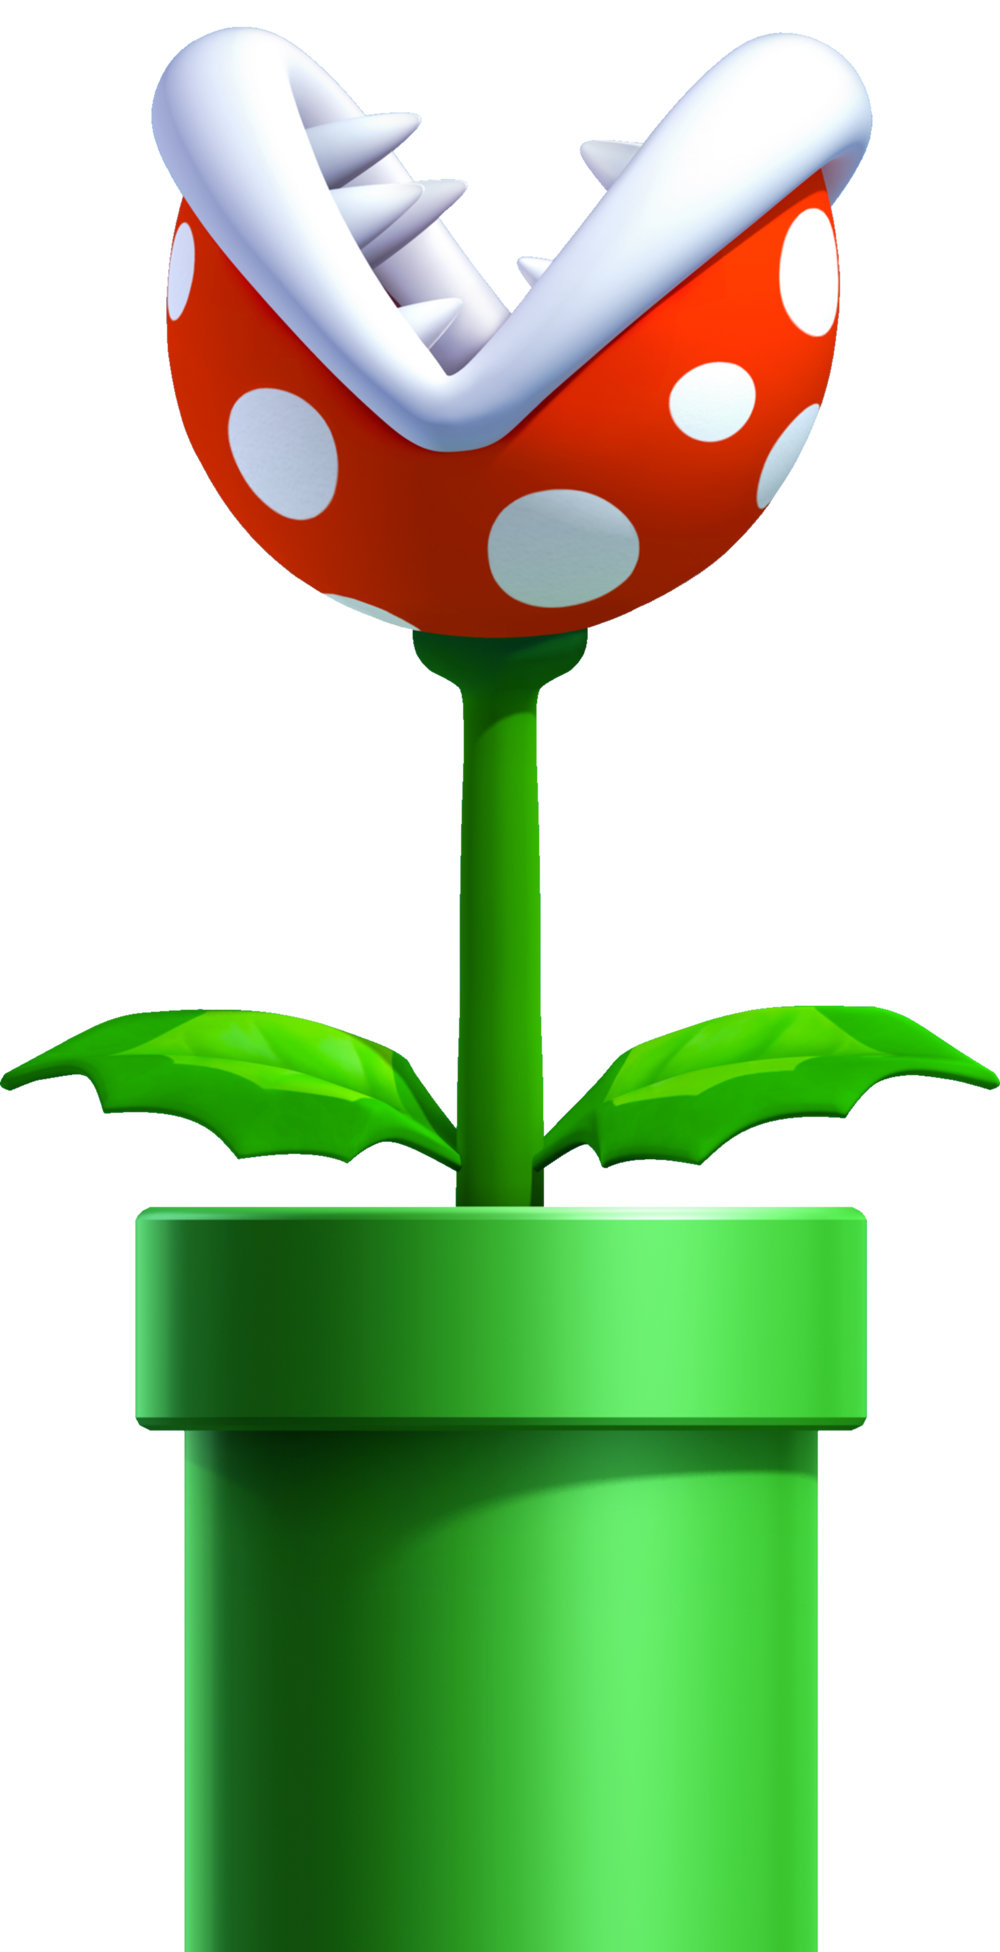 Pipe Tour - Super Mario Wiki, the Mario encyclopedia